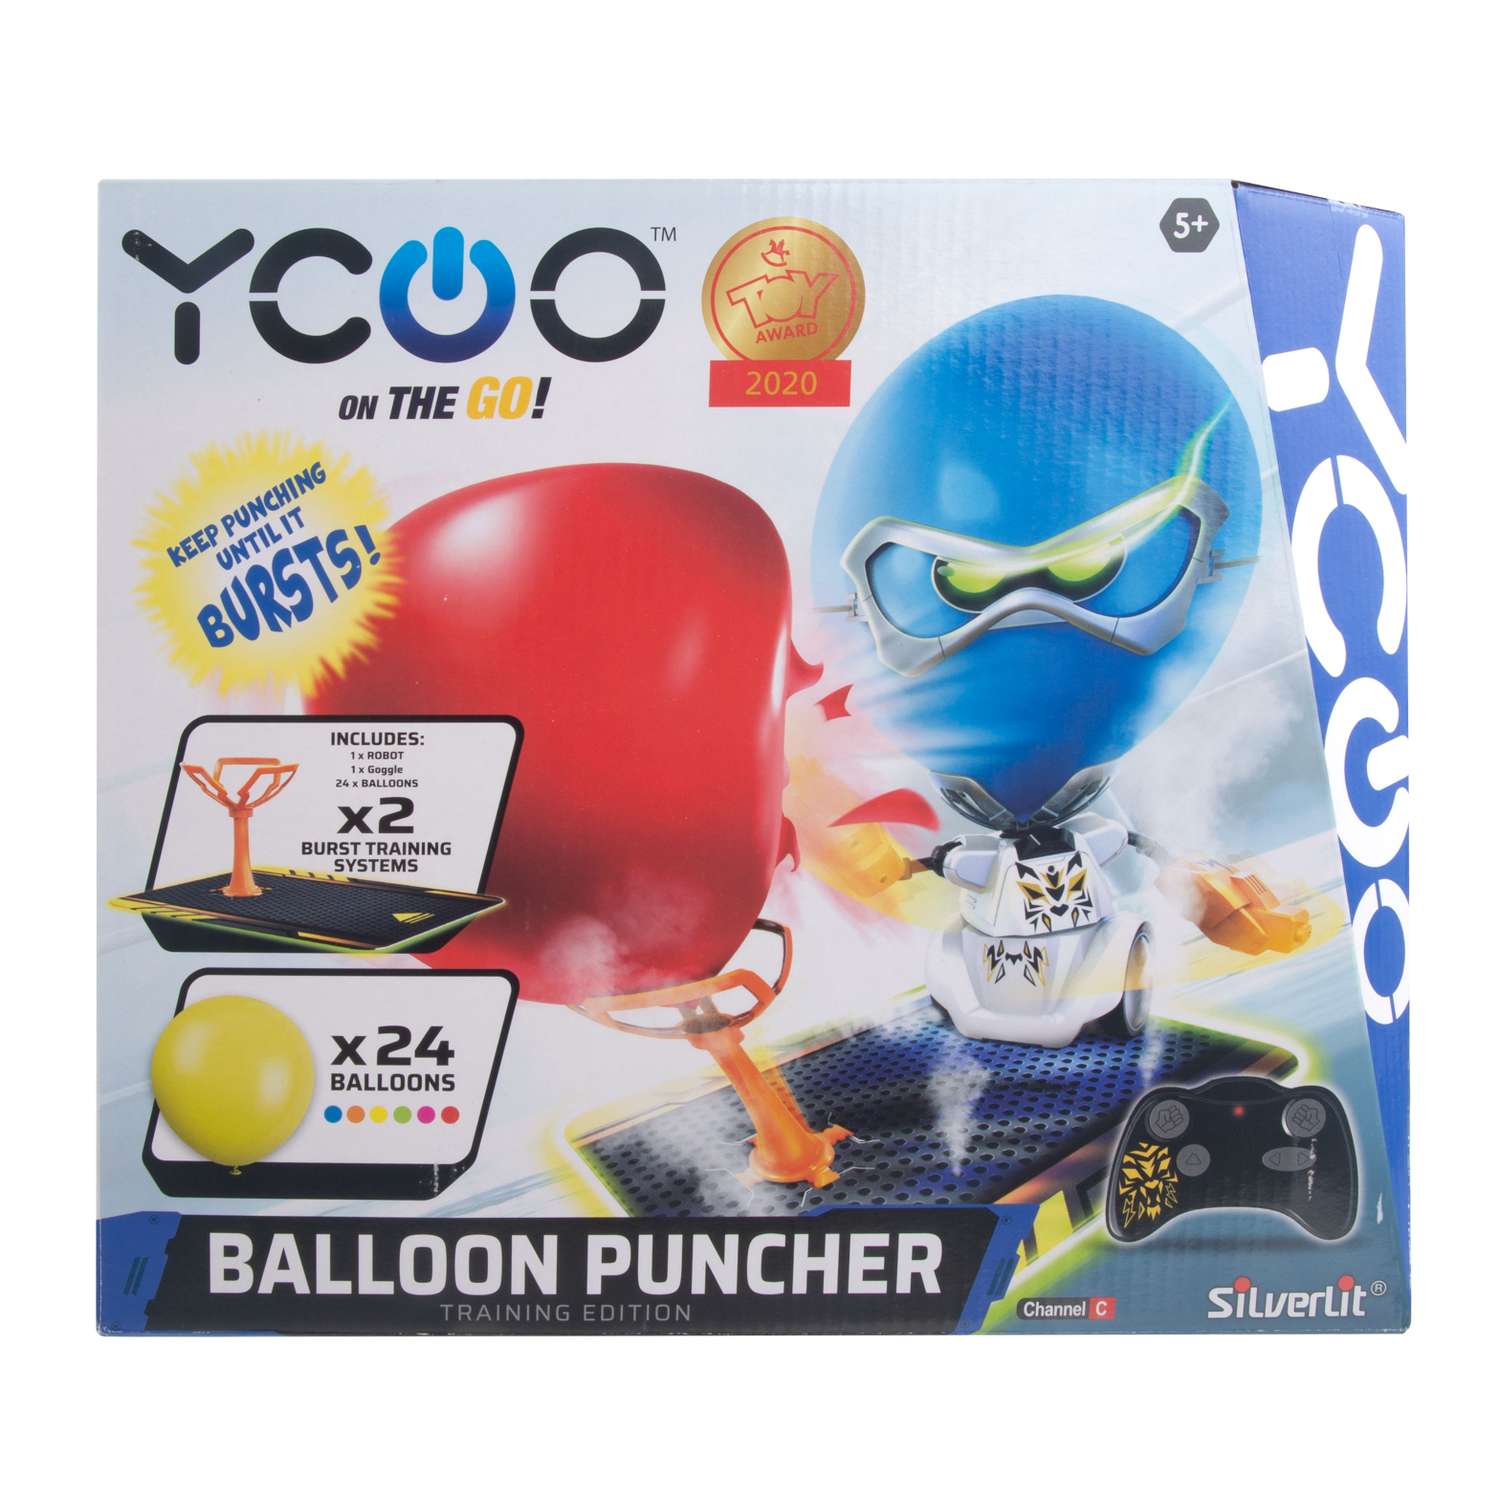 Robot Kombat Balloon Bi Pack by Ycoo Silverlit